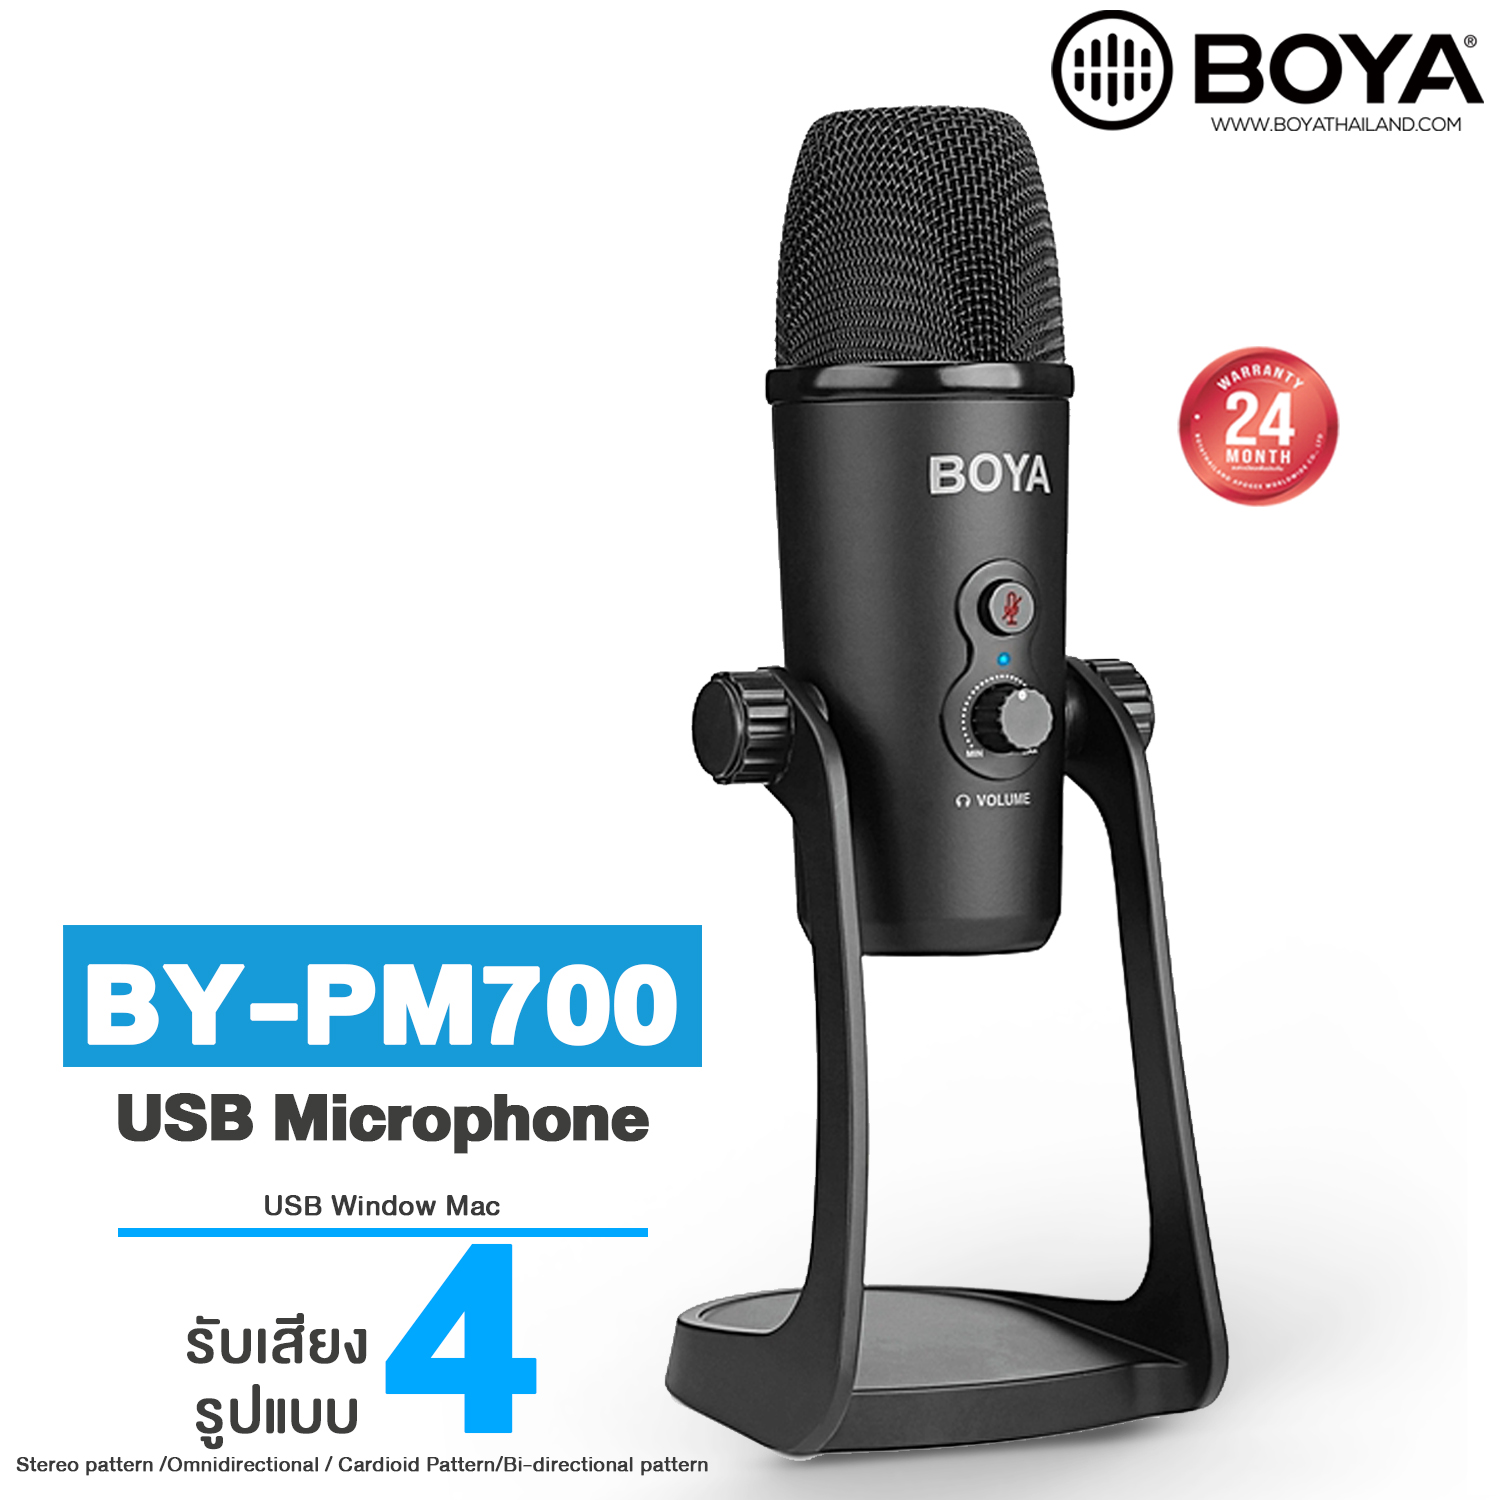 Boya BY-PM700 usb microphone